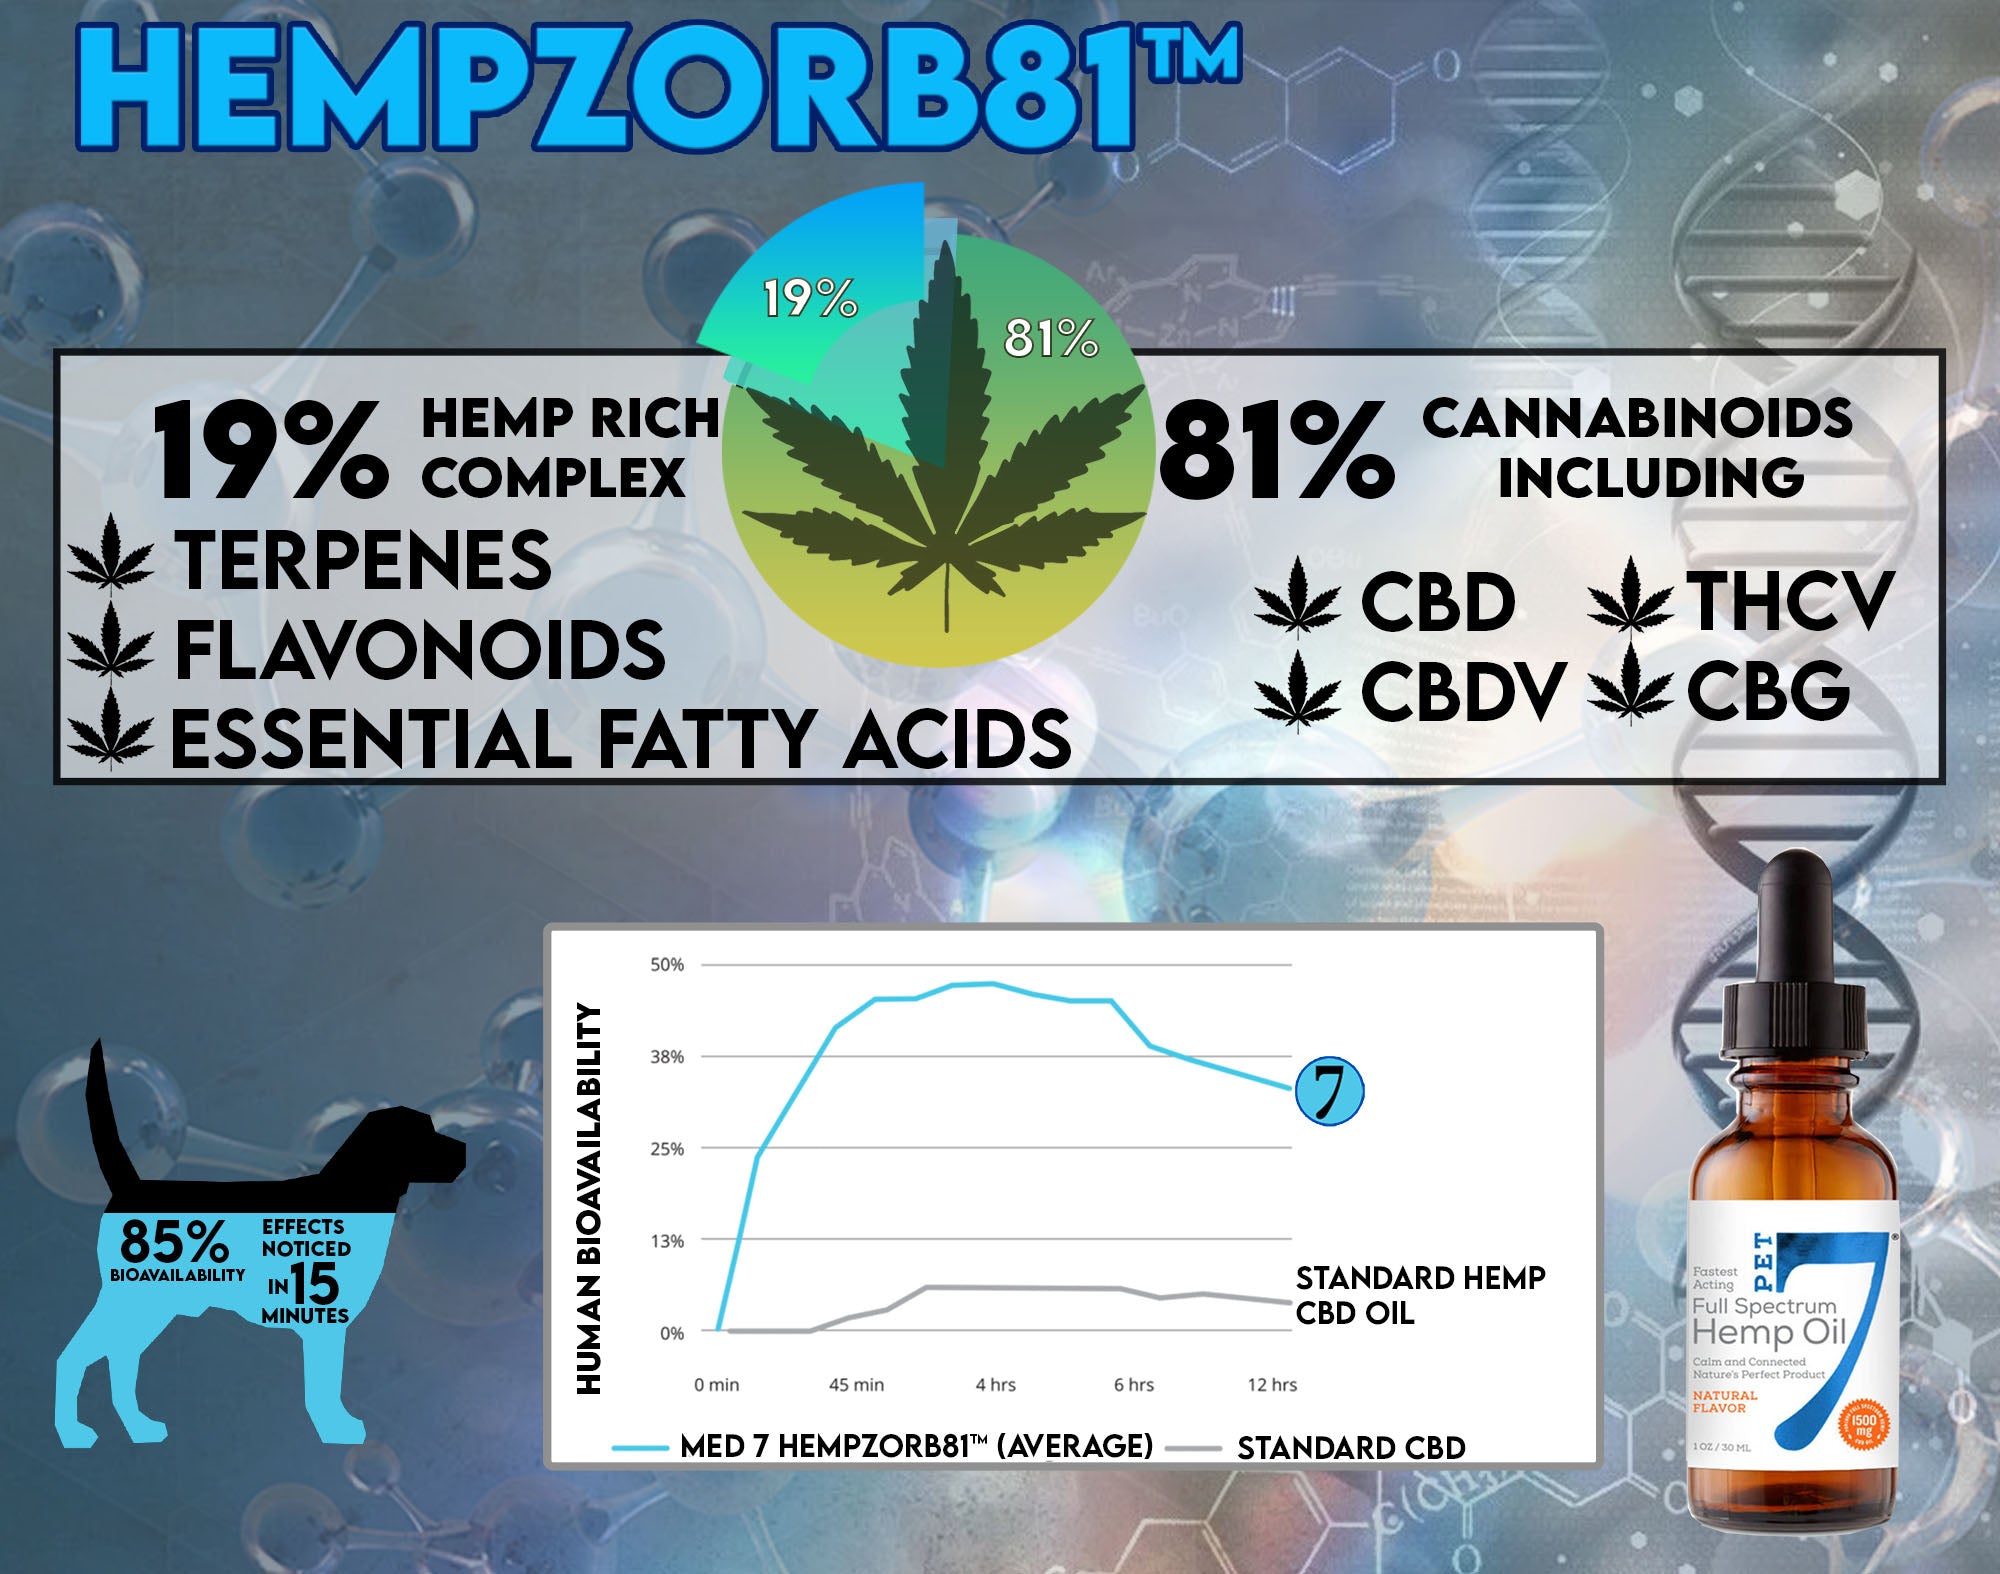 Hempzorb81™  hemp plant is 81% cannabinoids including CBD, CBDV, THCV, CBG, and 19% hemp rich complex